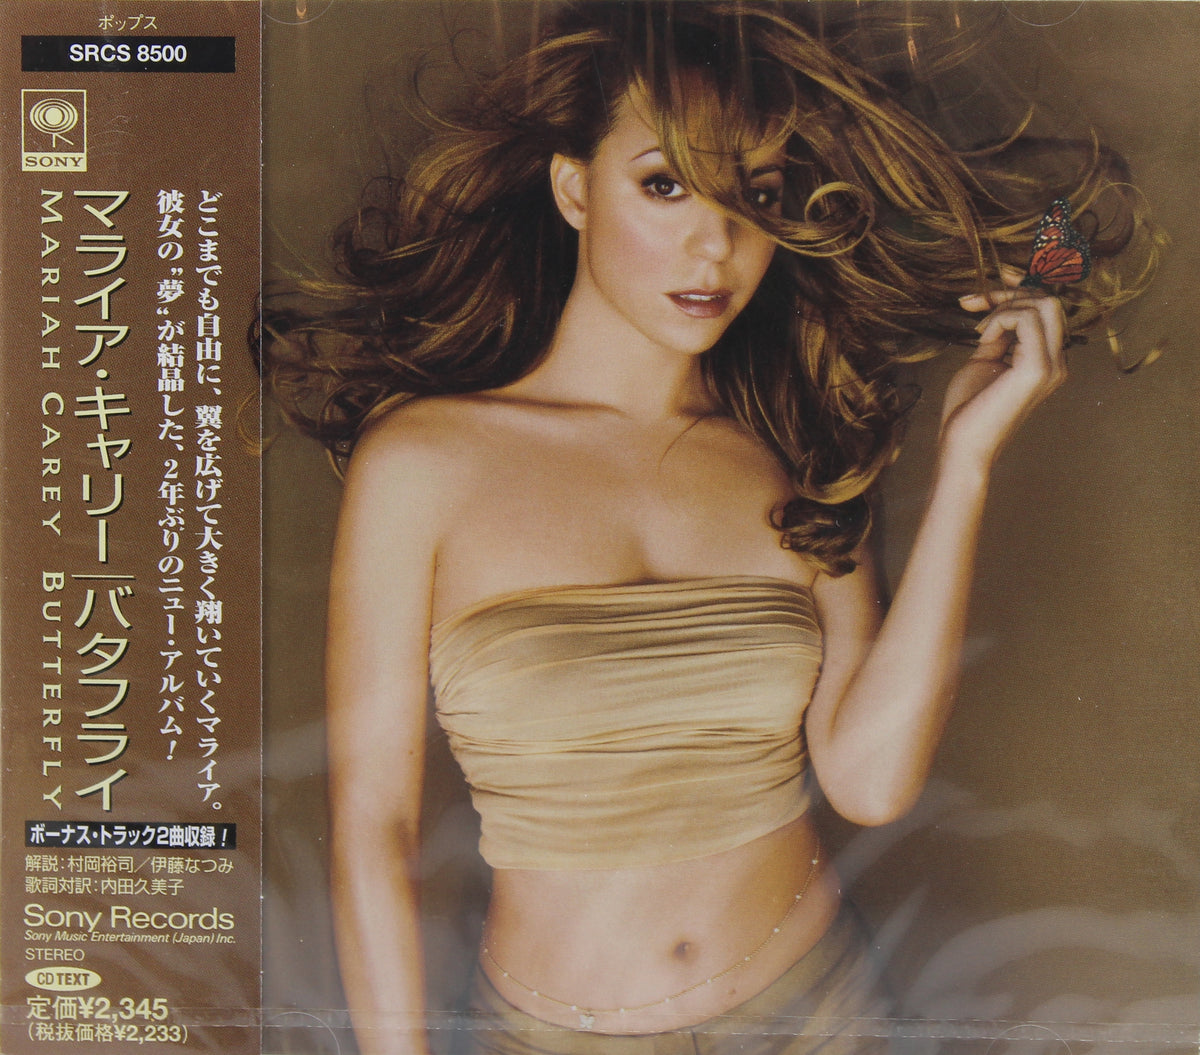 Mariah Carey – Butterfly, CD Album, Japan 1997(CD 605)